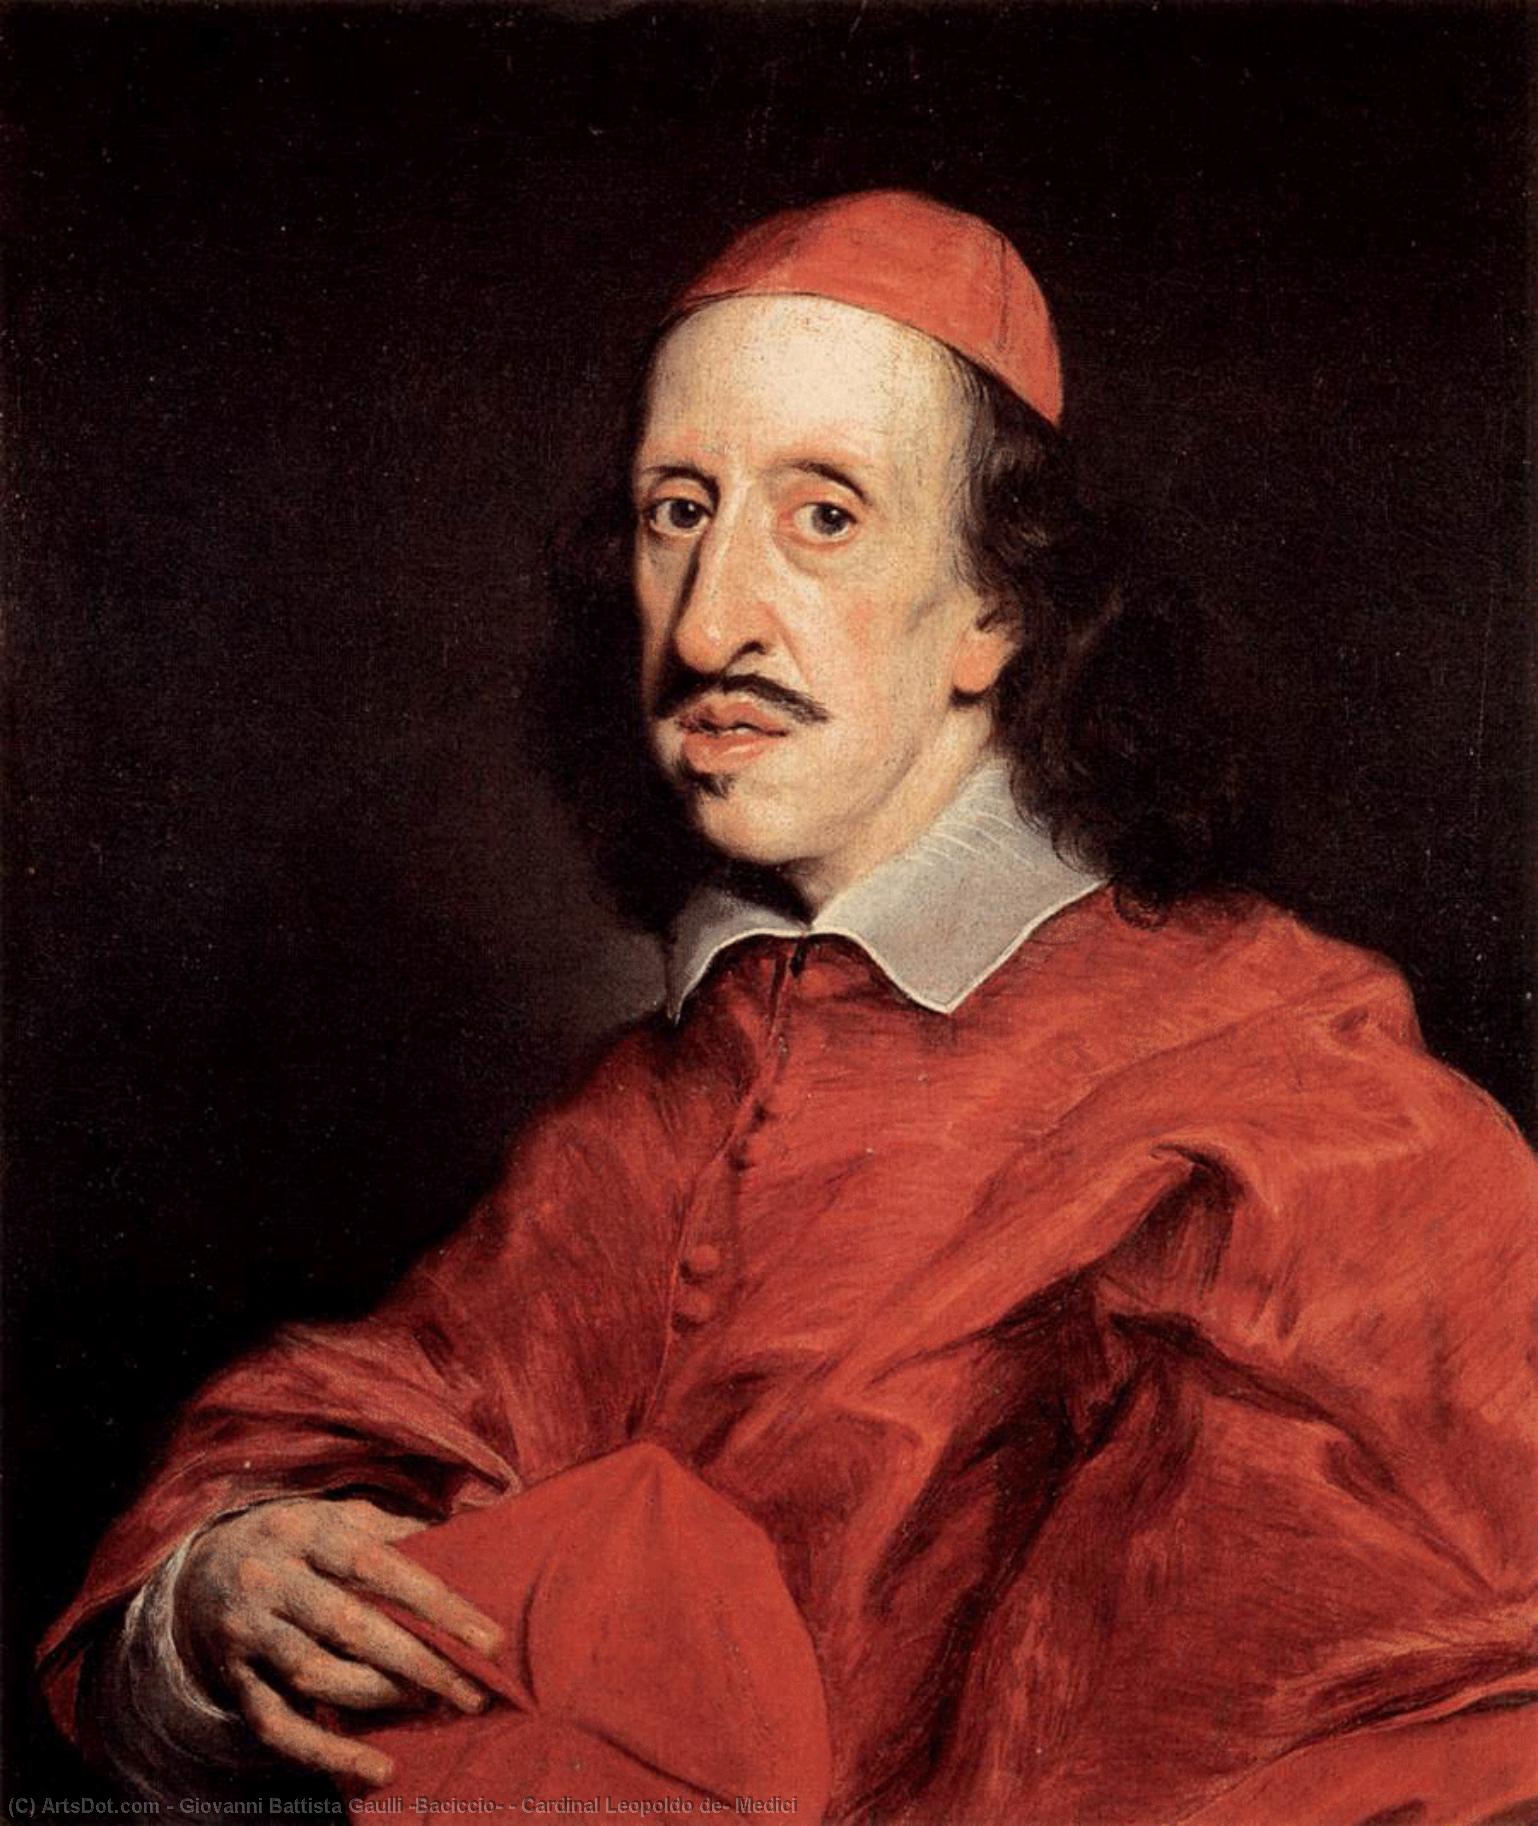 Order Paintings Reproductions Cardinal Leopoldo de` Medici, 1667 by Giovanni Battista Gaulli (Baciccio) | ArtsDot.com